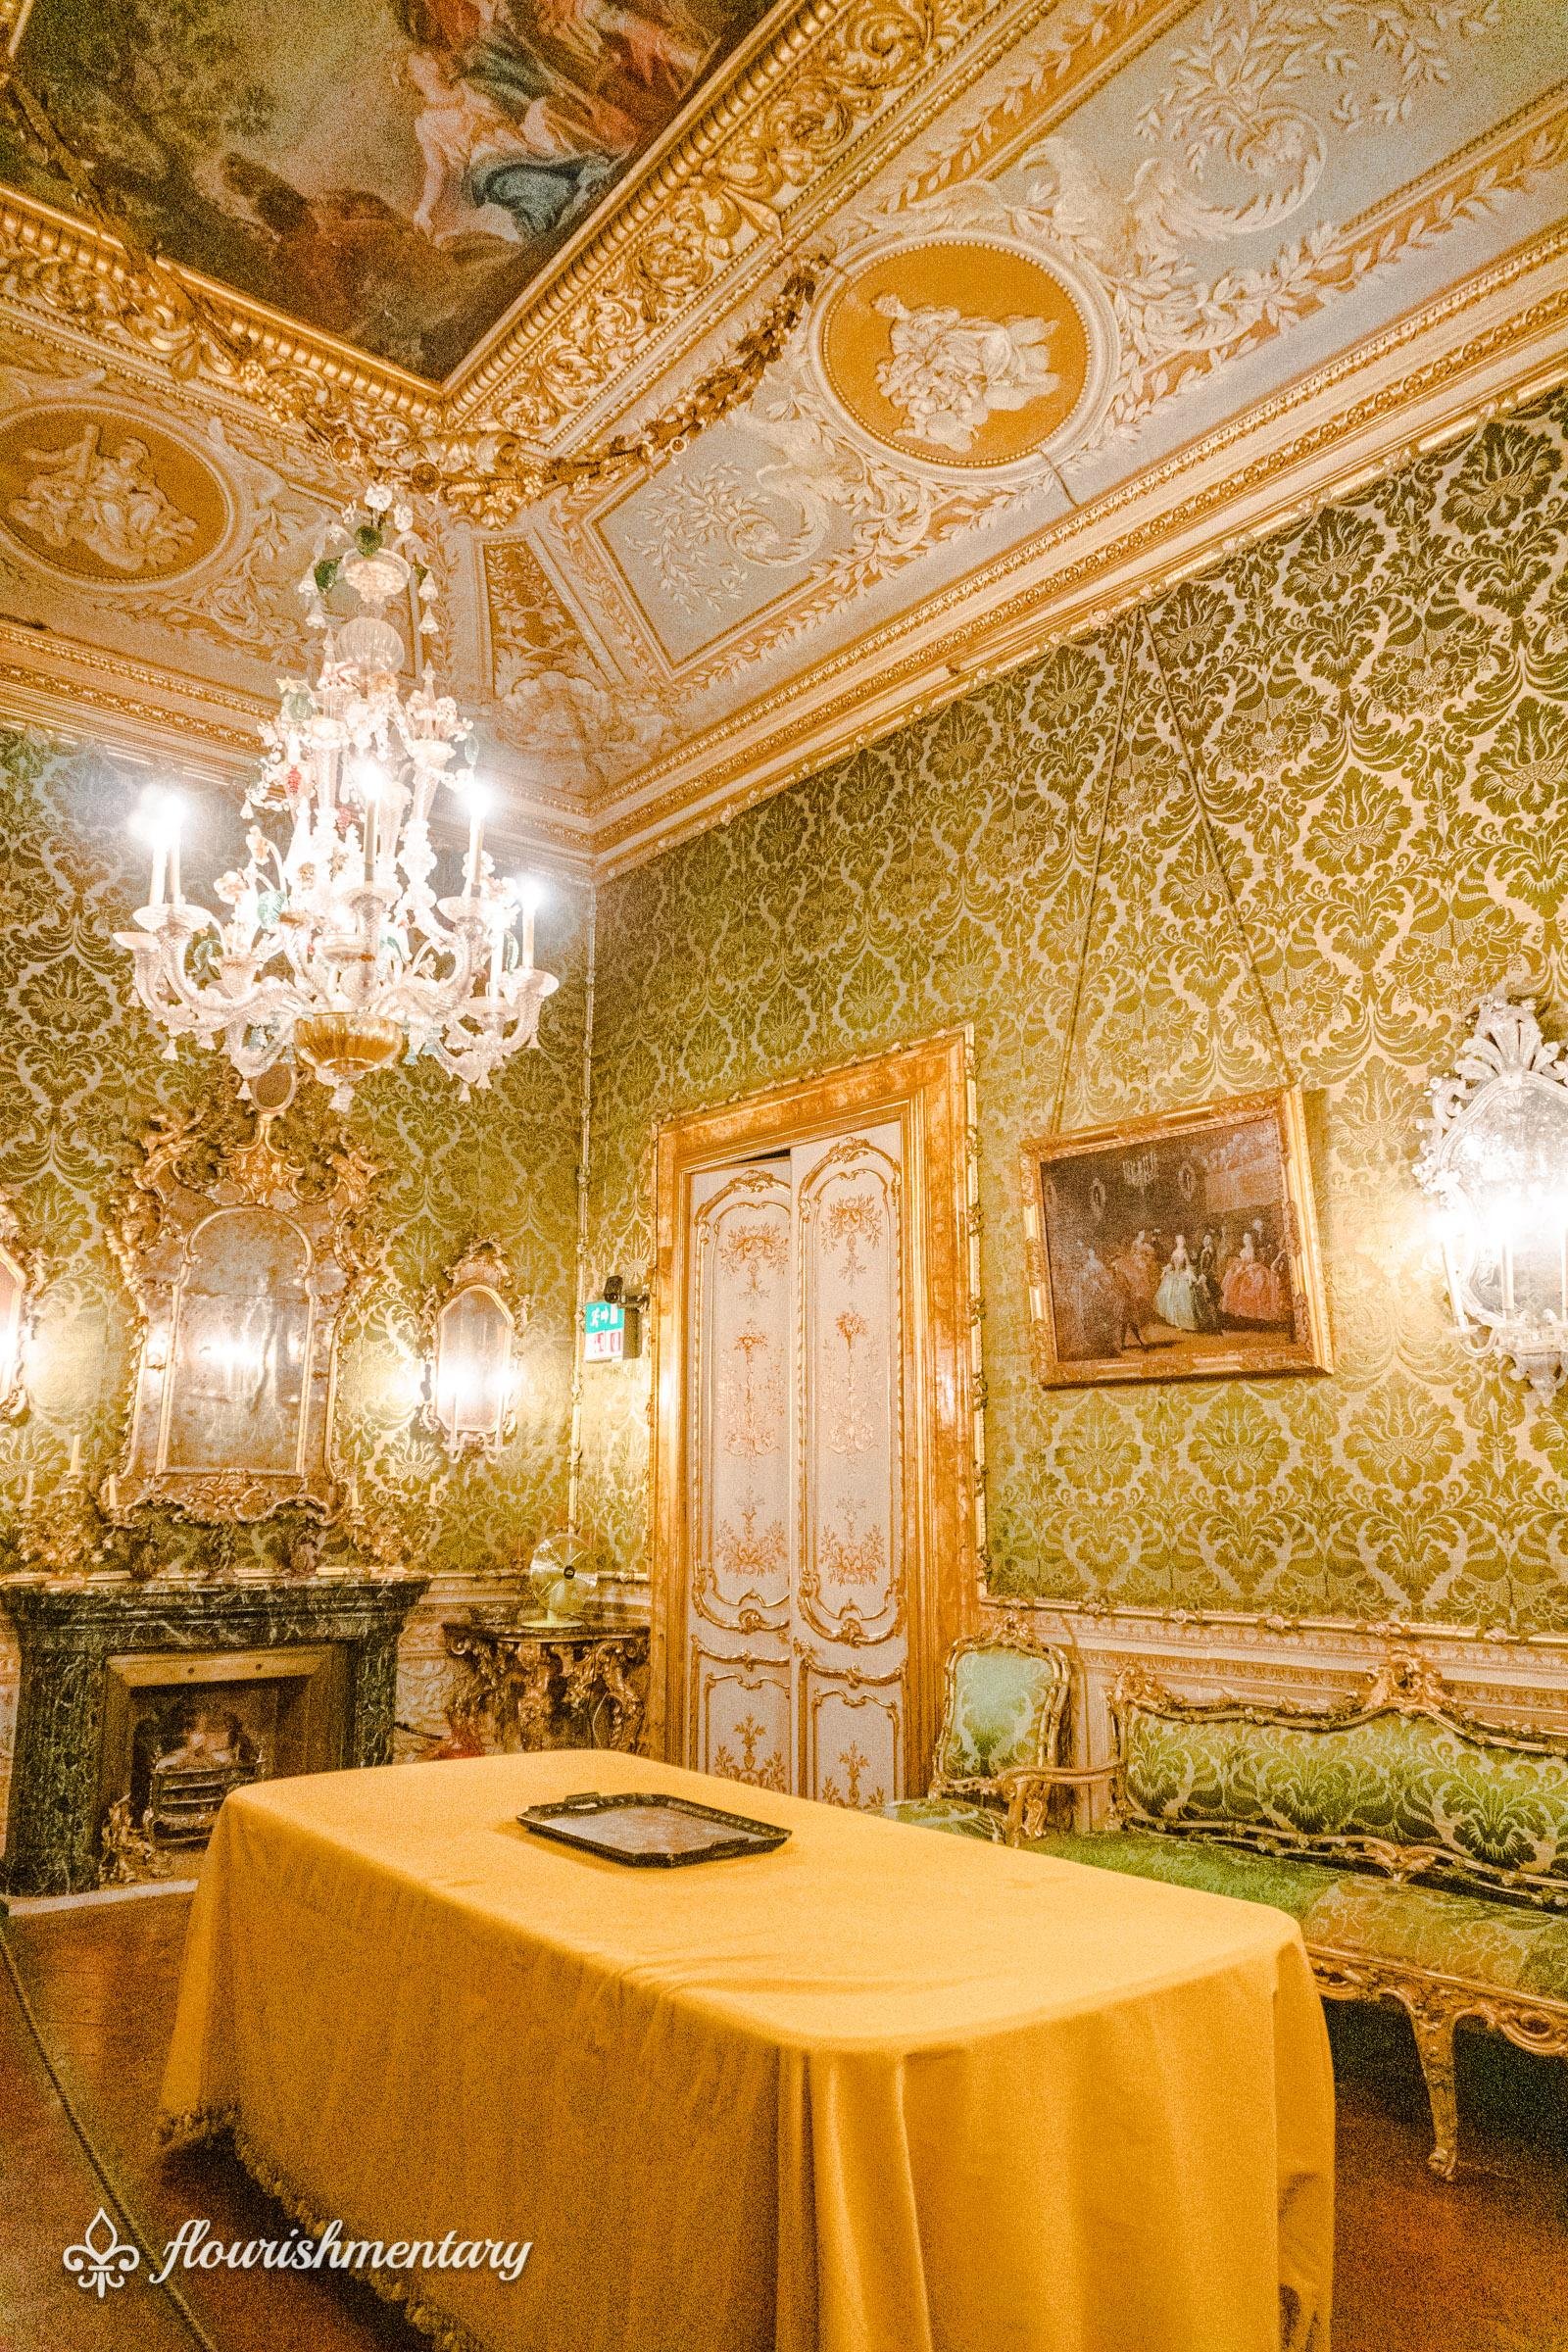 The Venetian Room galleria doria pamphilj